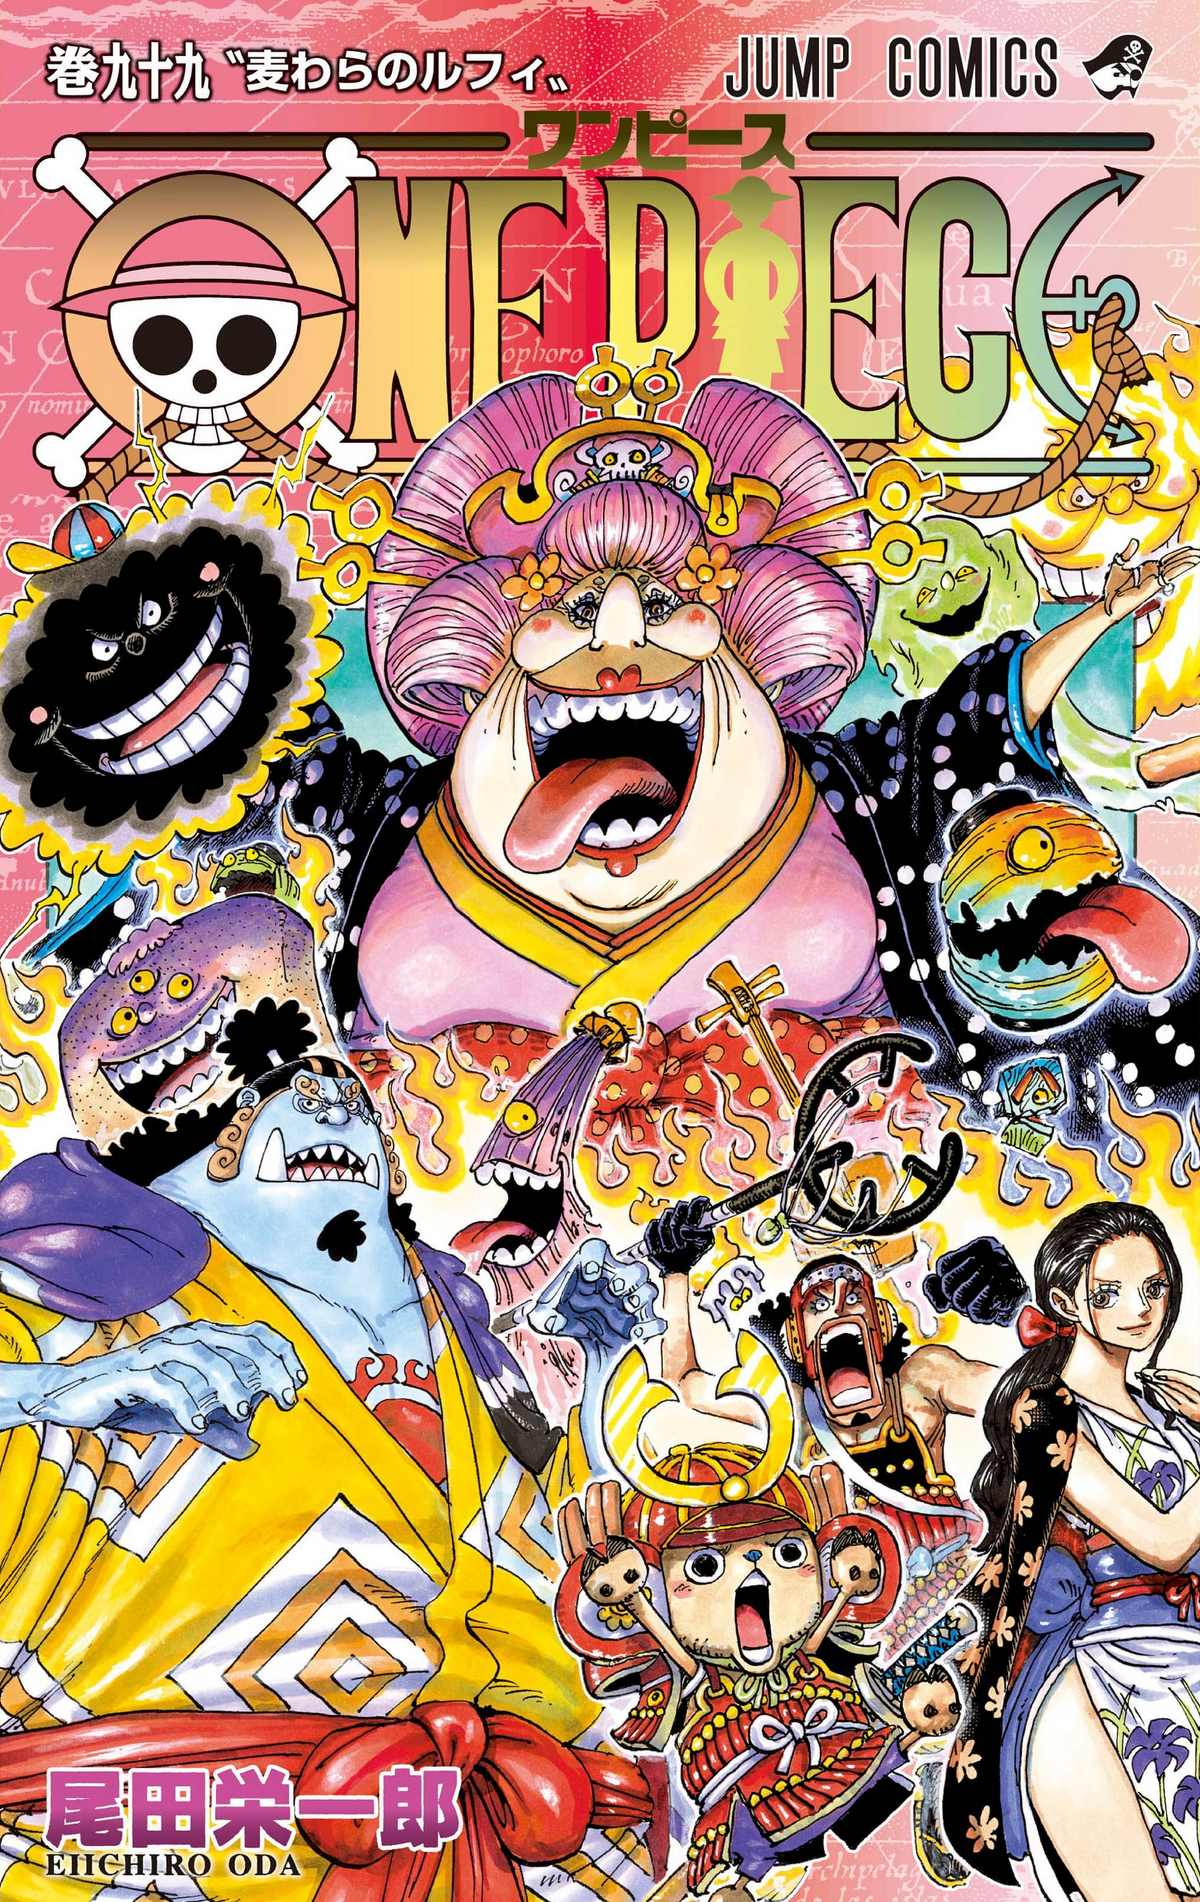 One Piece Fandom - BRIEF SPOILER CHAPTER 1069 > - Gear 5 Luffy vs